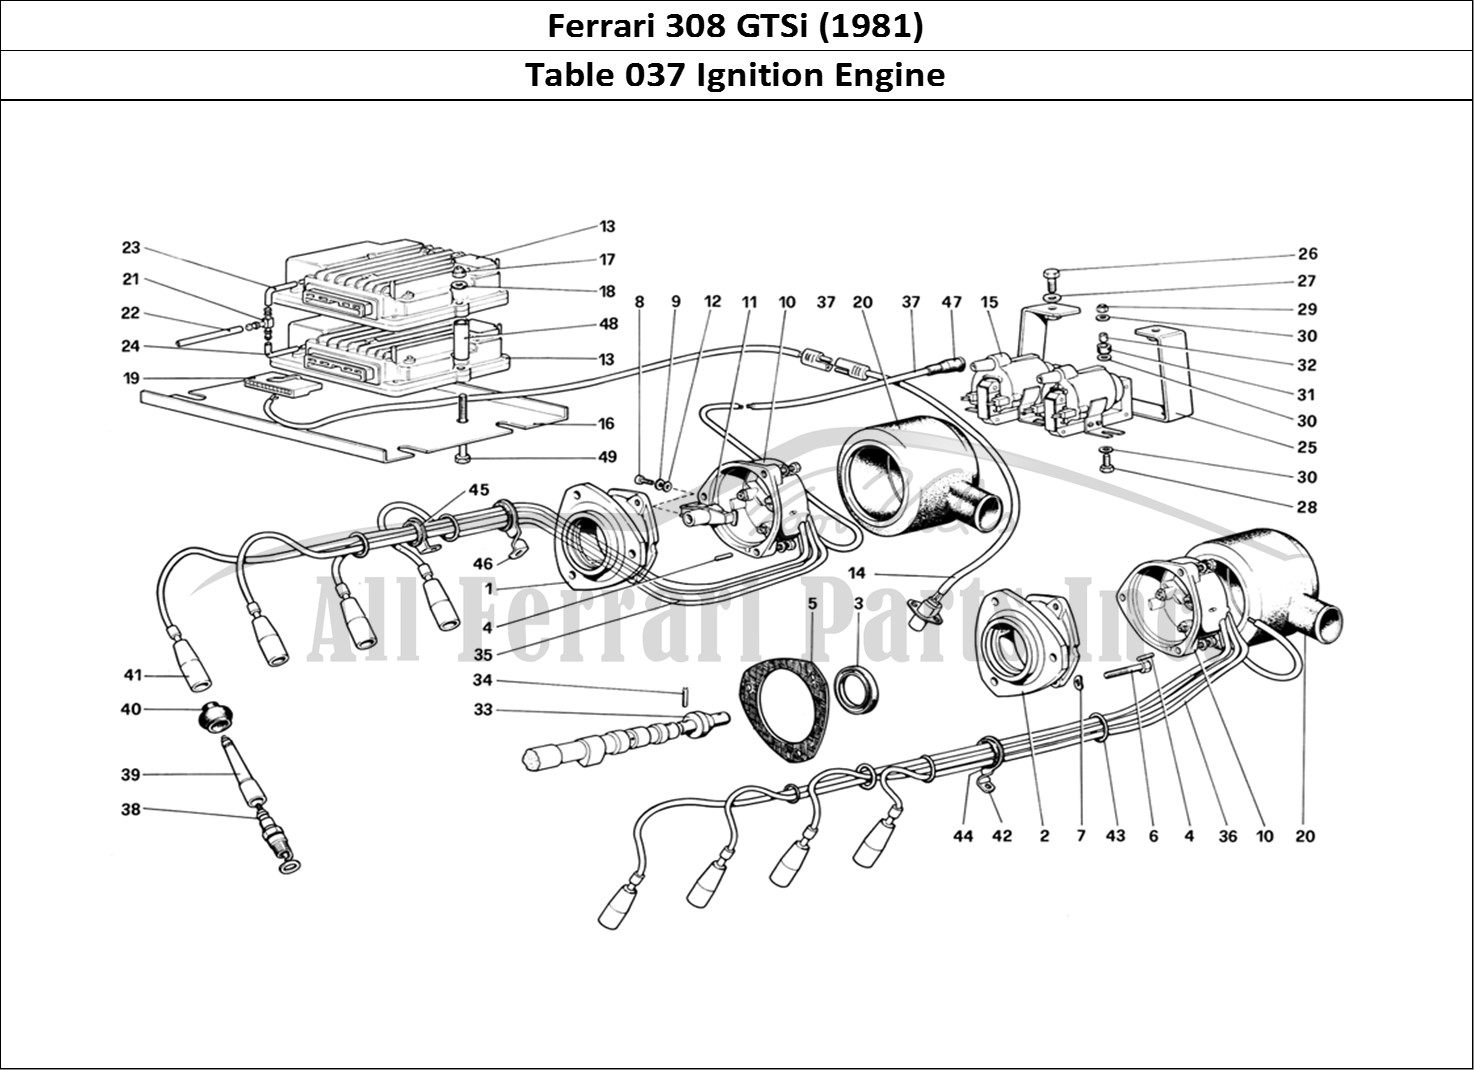 Ferrari Parts Ferrari 308 GTBi (1981) Page 037 Engine Ignition